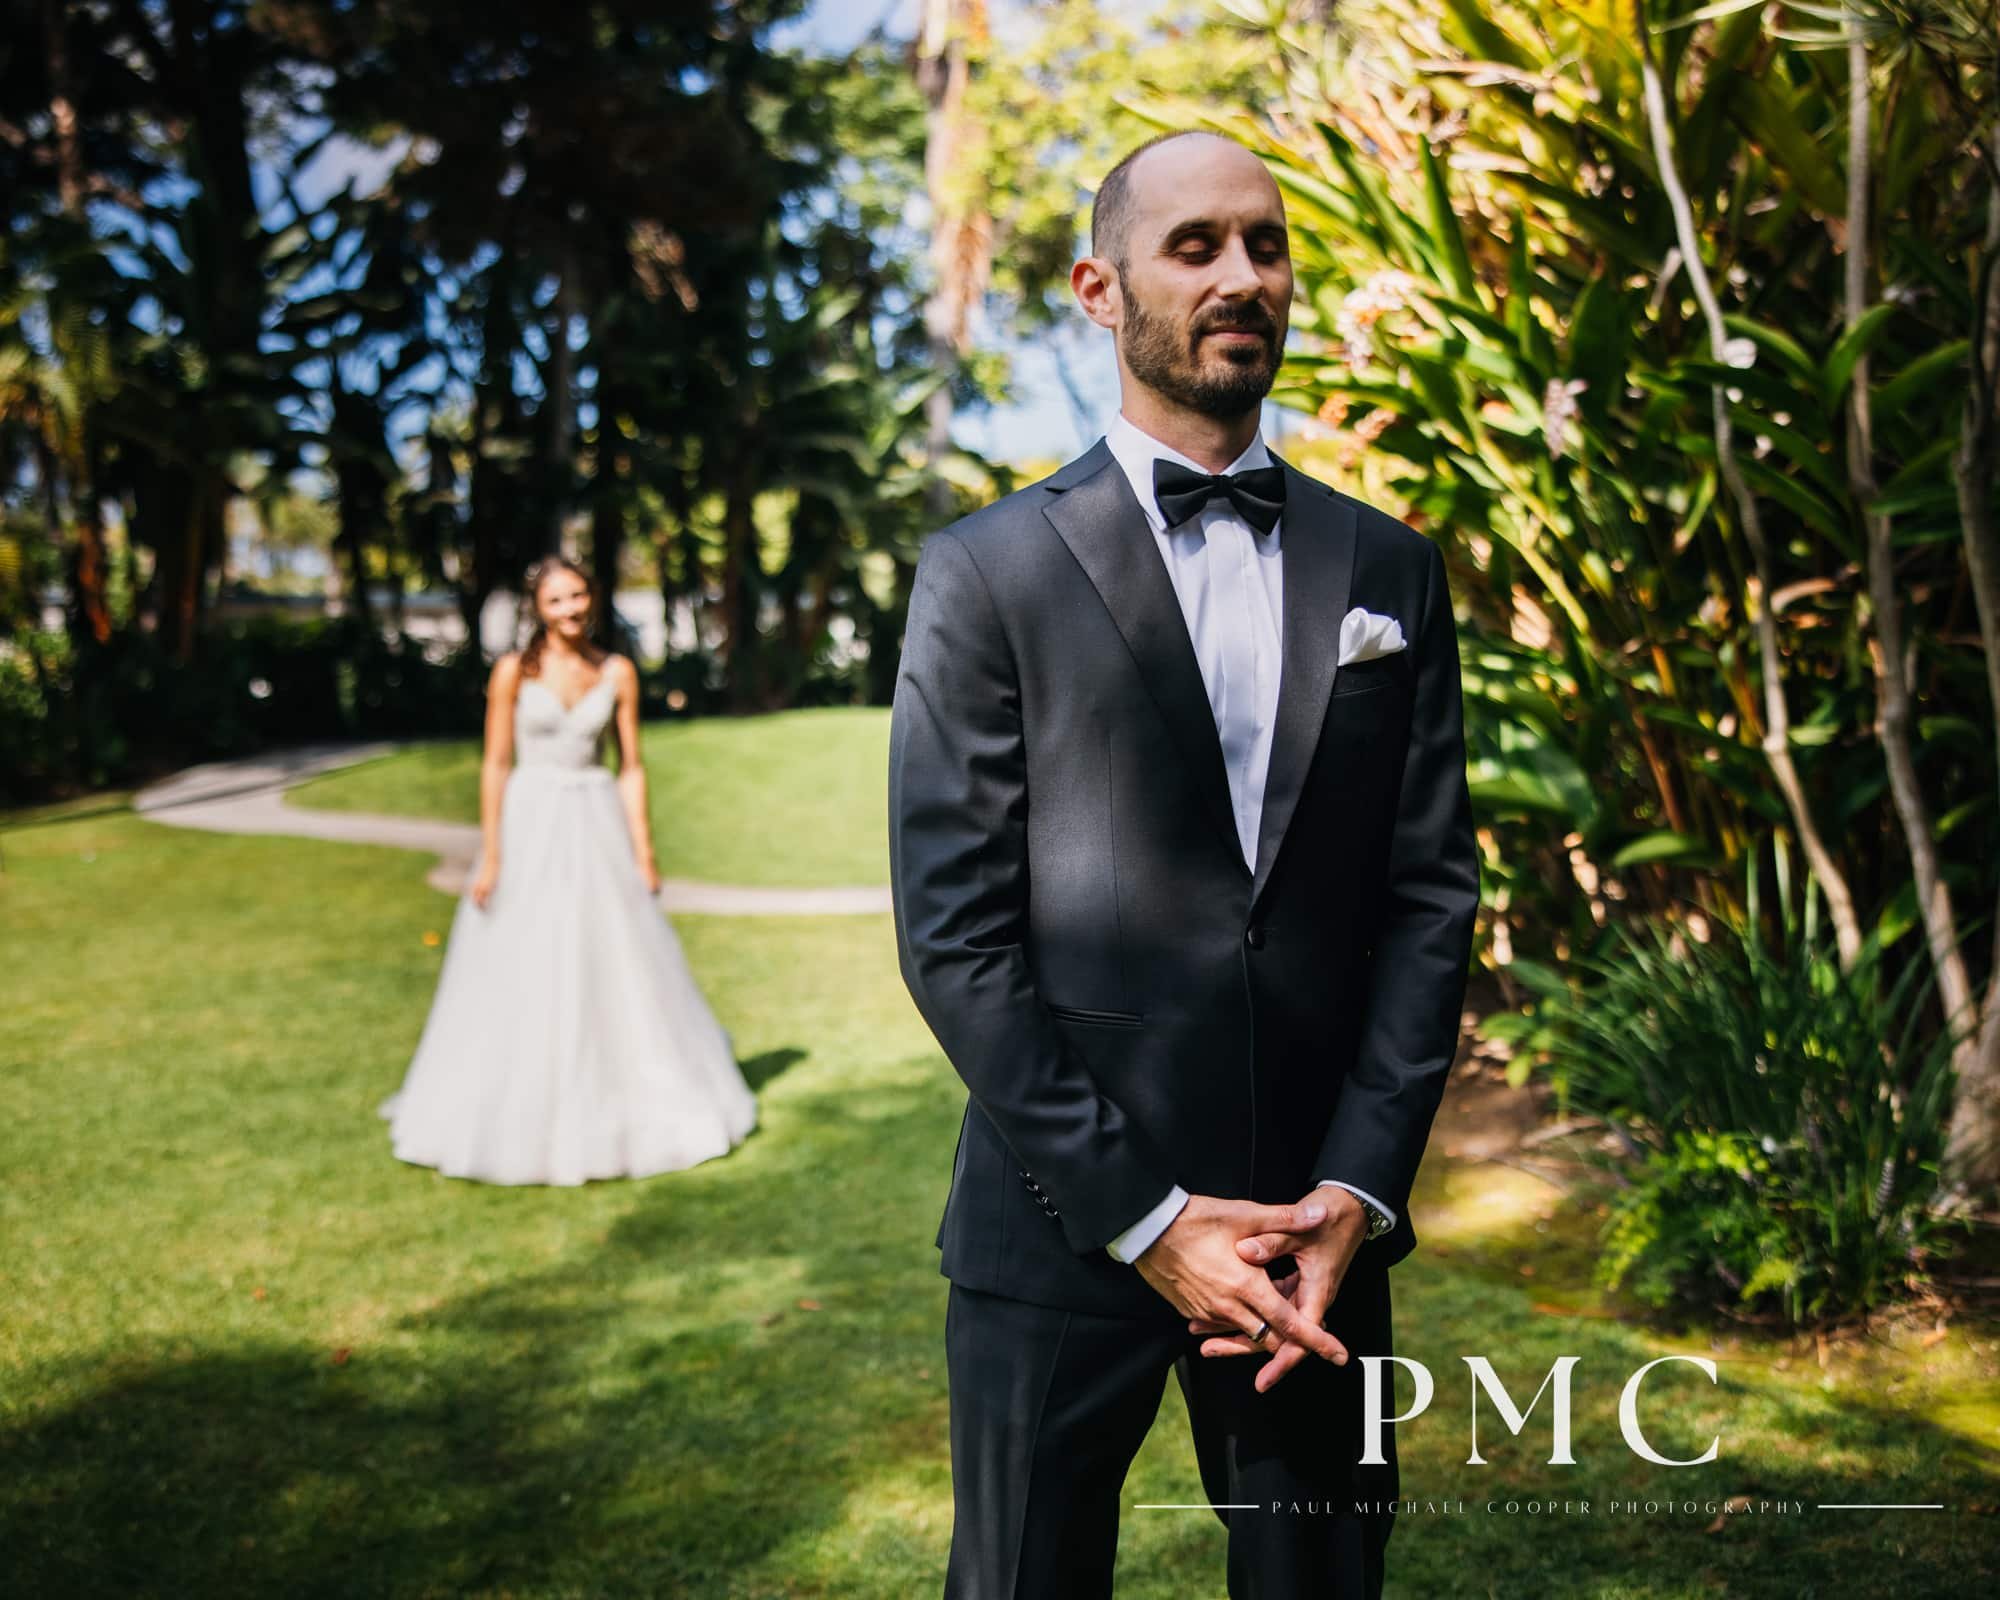 Paradise Point Resort & Spa - Summer Mission Bay Wedding - Best San Diego Wedding Photographer-3.jpg